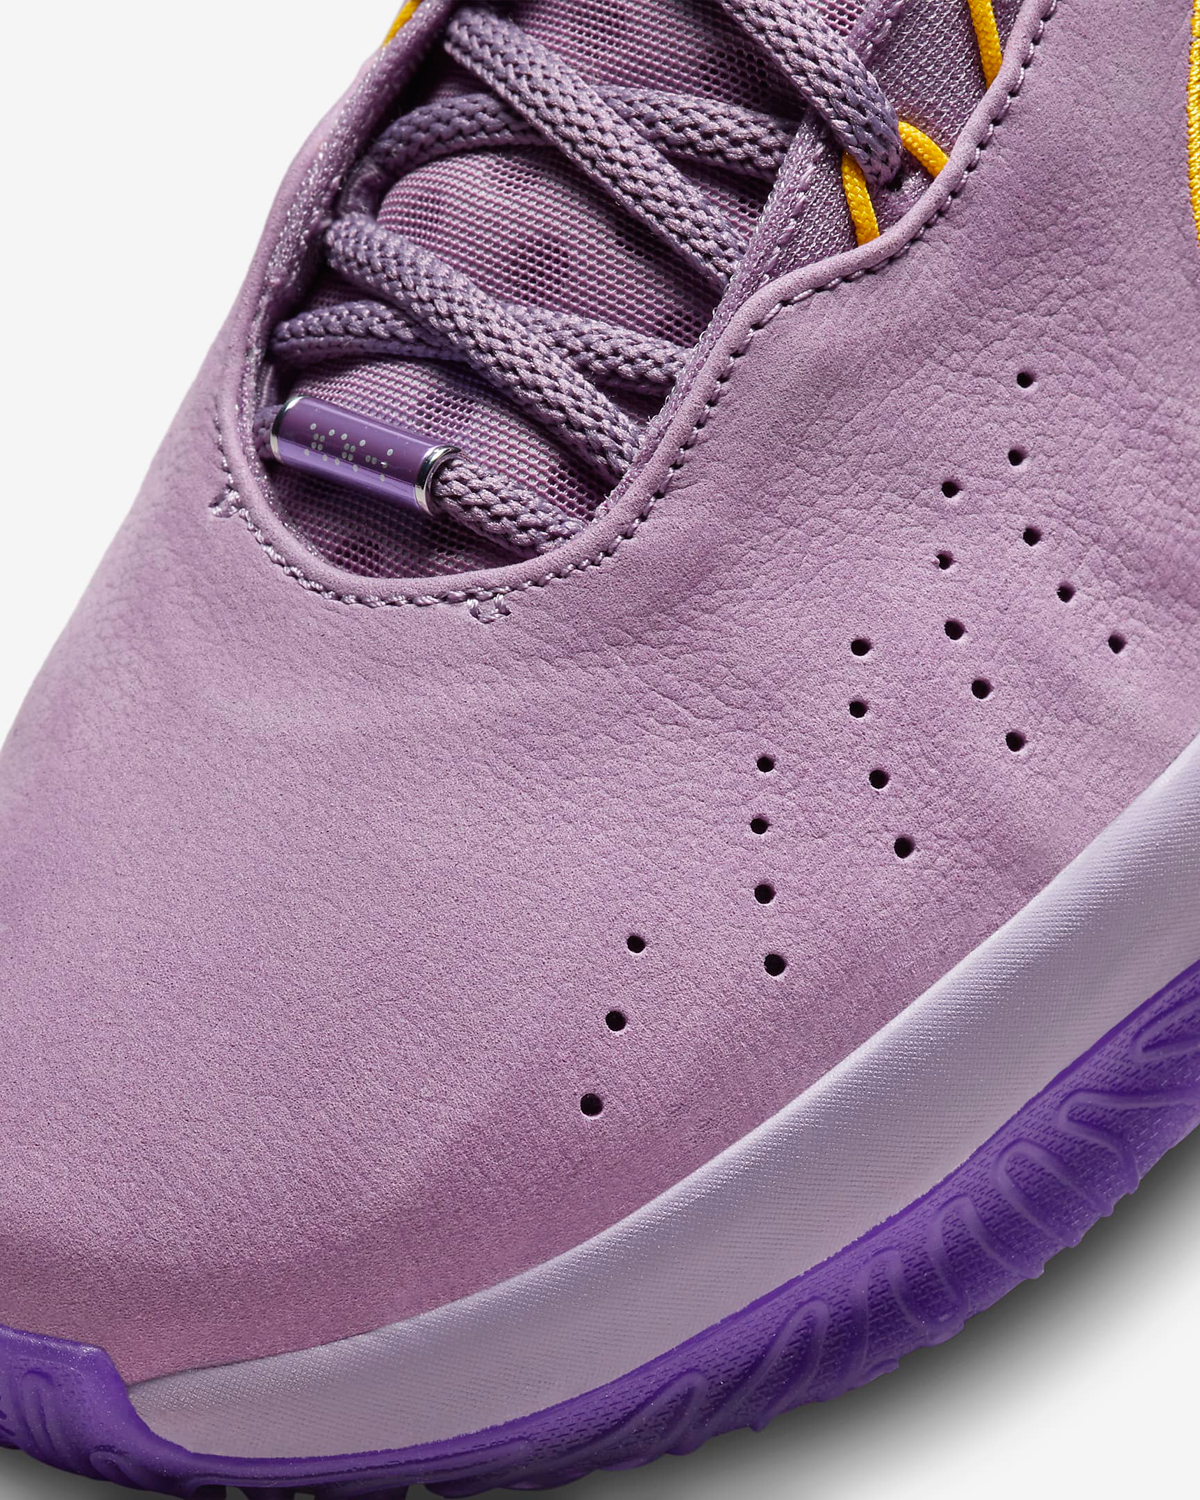 Nike-LeBron-21-Purple-Rain-Release-Date-7